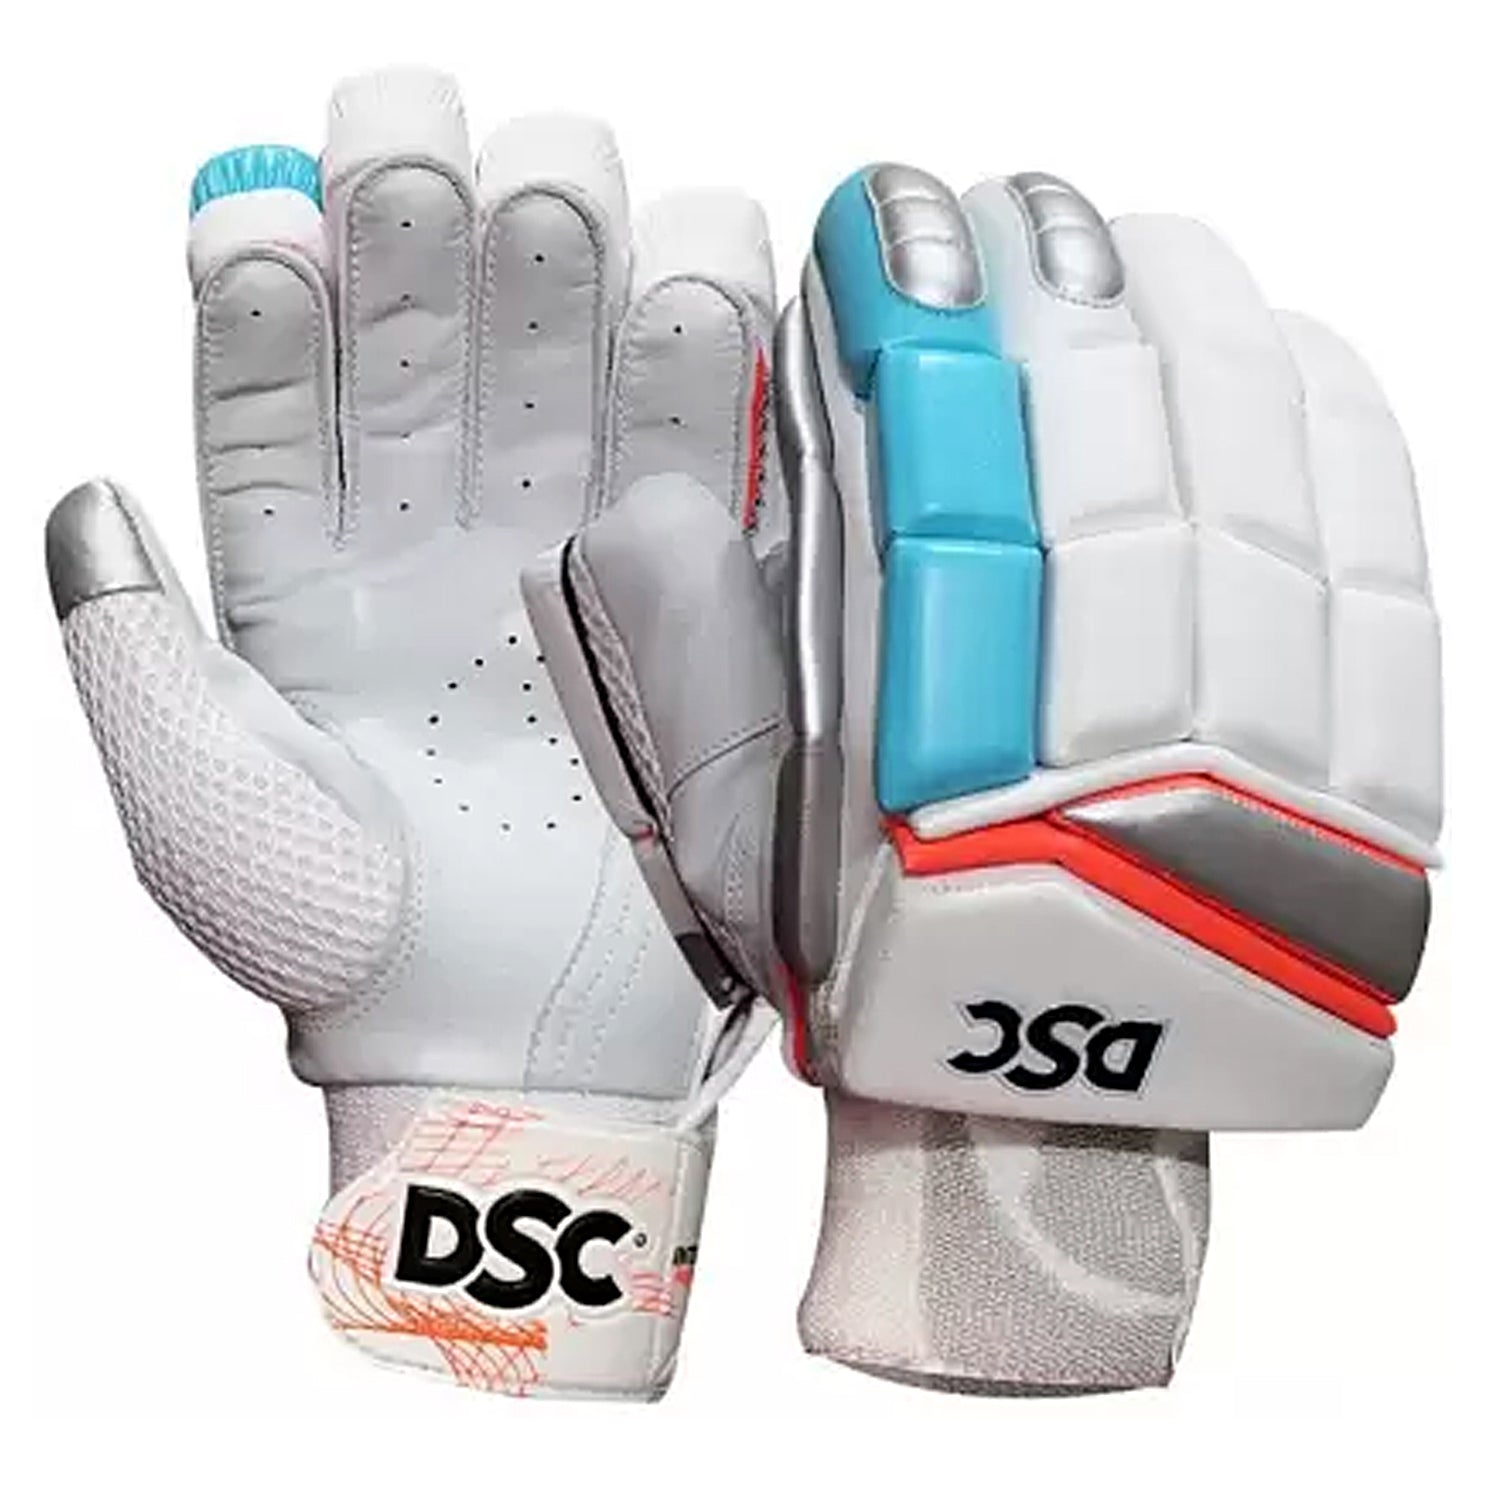 DSC Intense Passion RH Batting Gloves - Best Price online Prokicksports.com